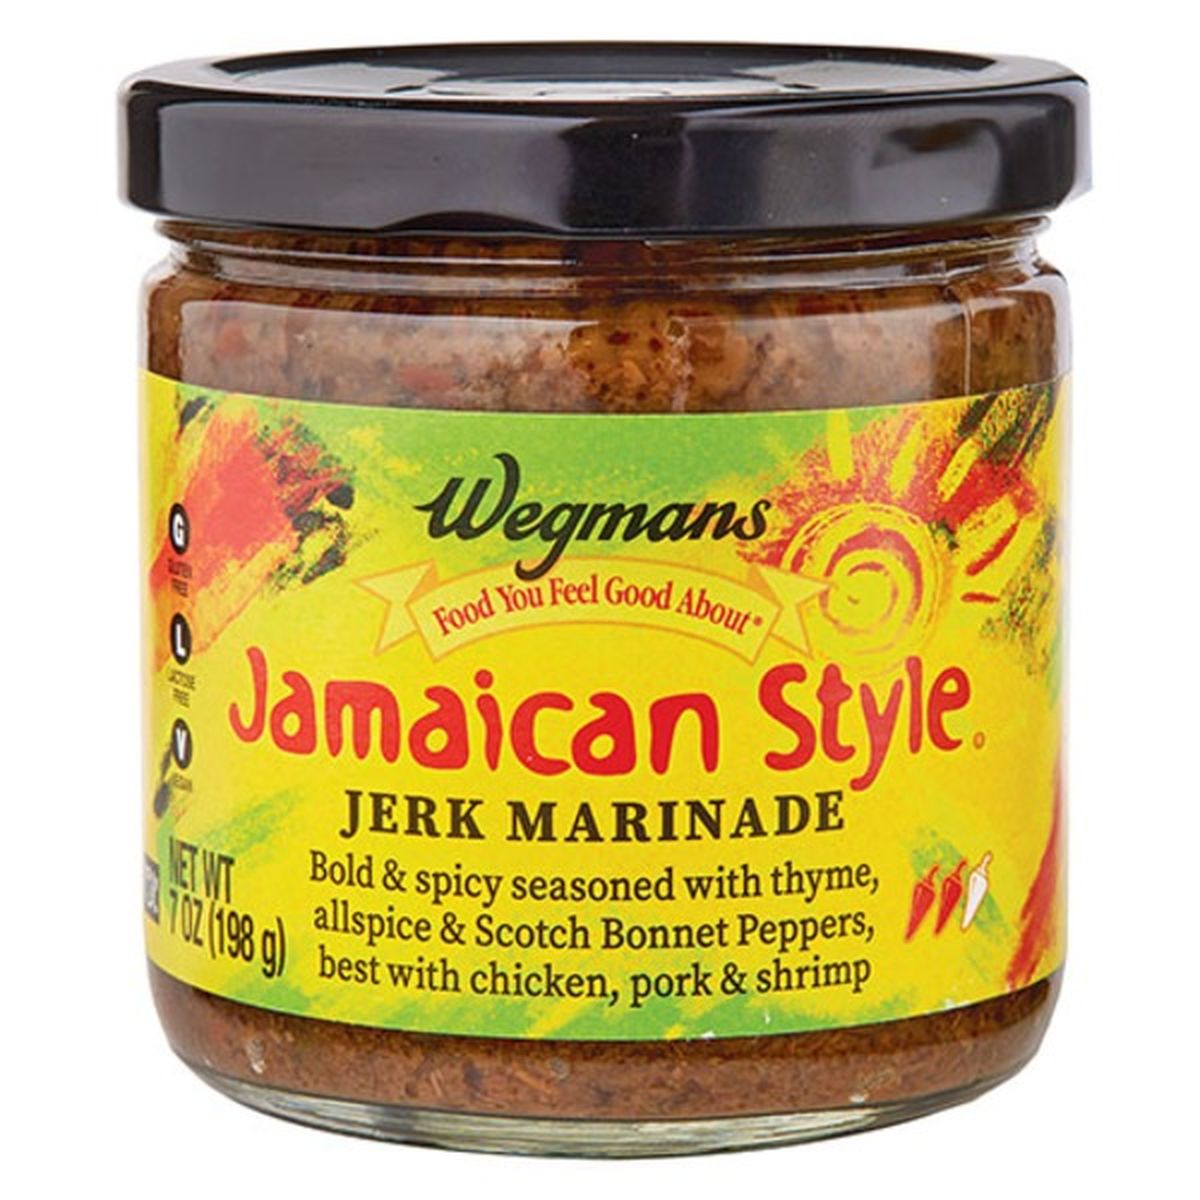 Calories in Wegmans Jamaican Style Jerk Marinade